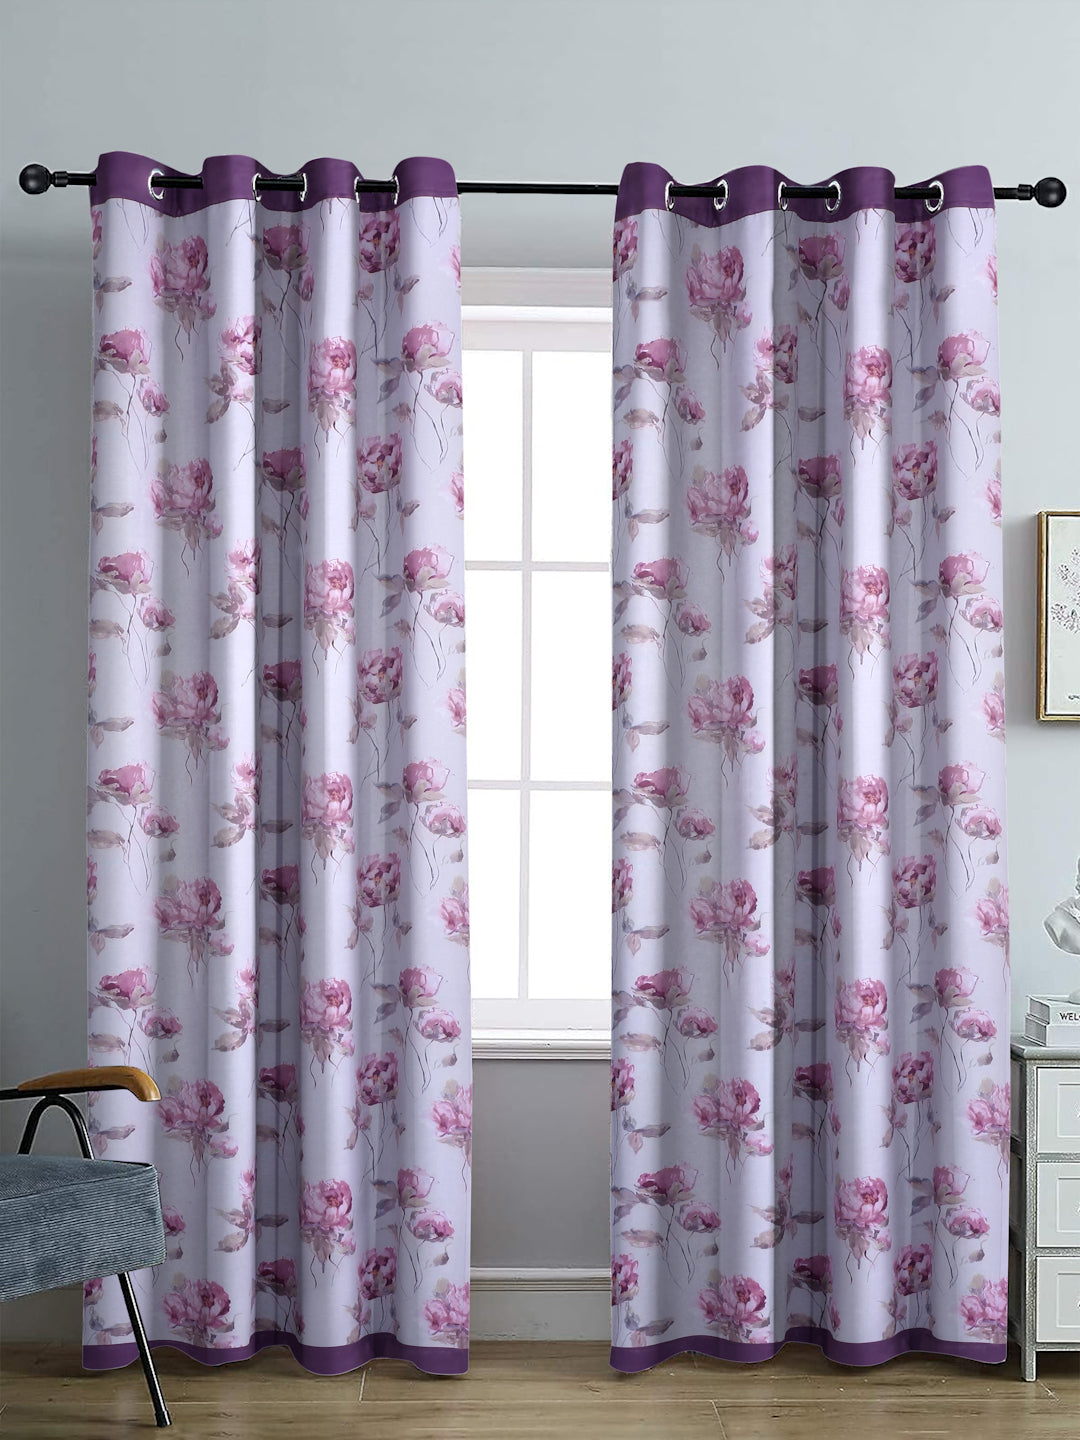 Reversible Floral Printed Blackout Curtains Set of 2- Purple